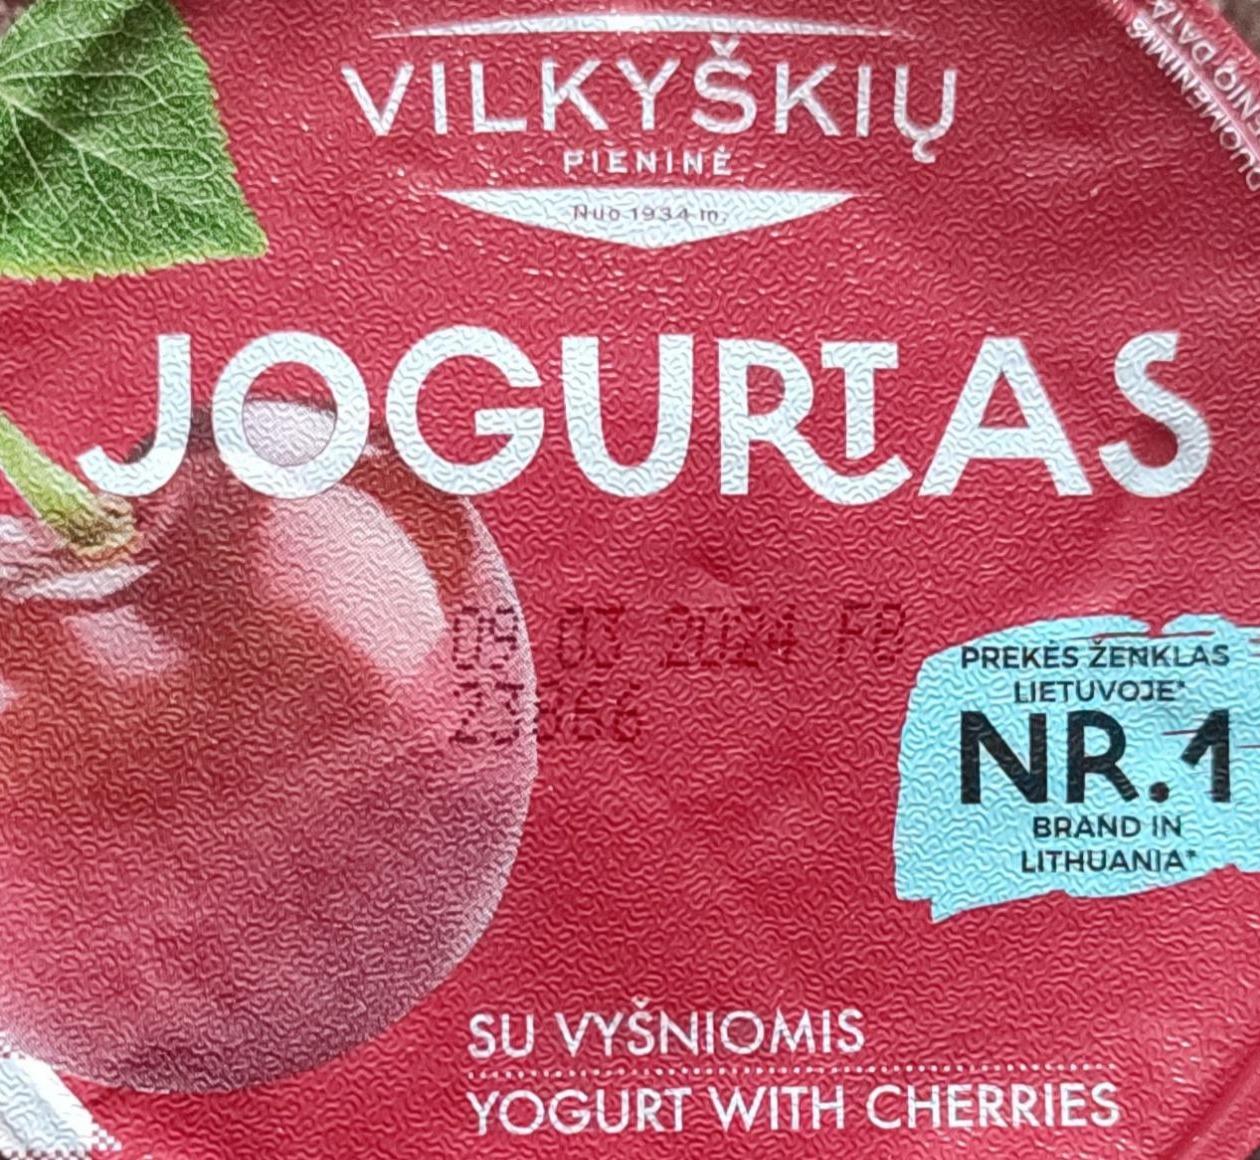 Фото - Йогурт з вишнею 3.6% жиру Vilkyskiu Vilkyškių pieninė